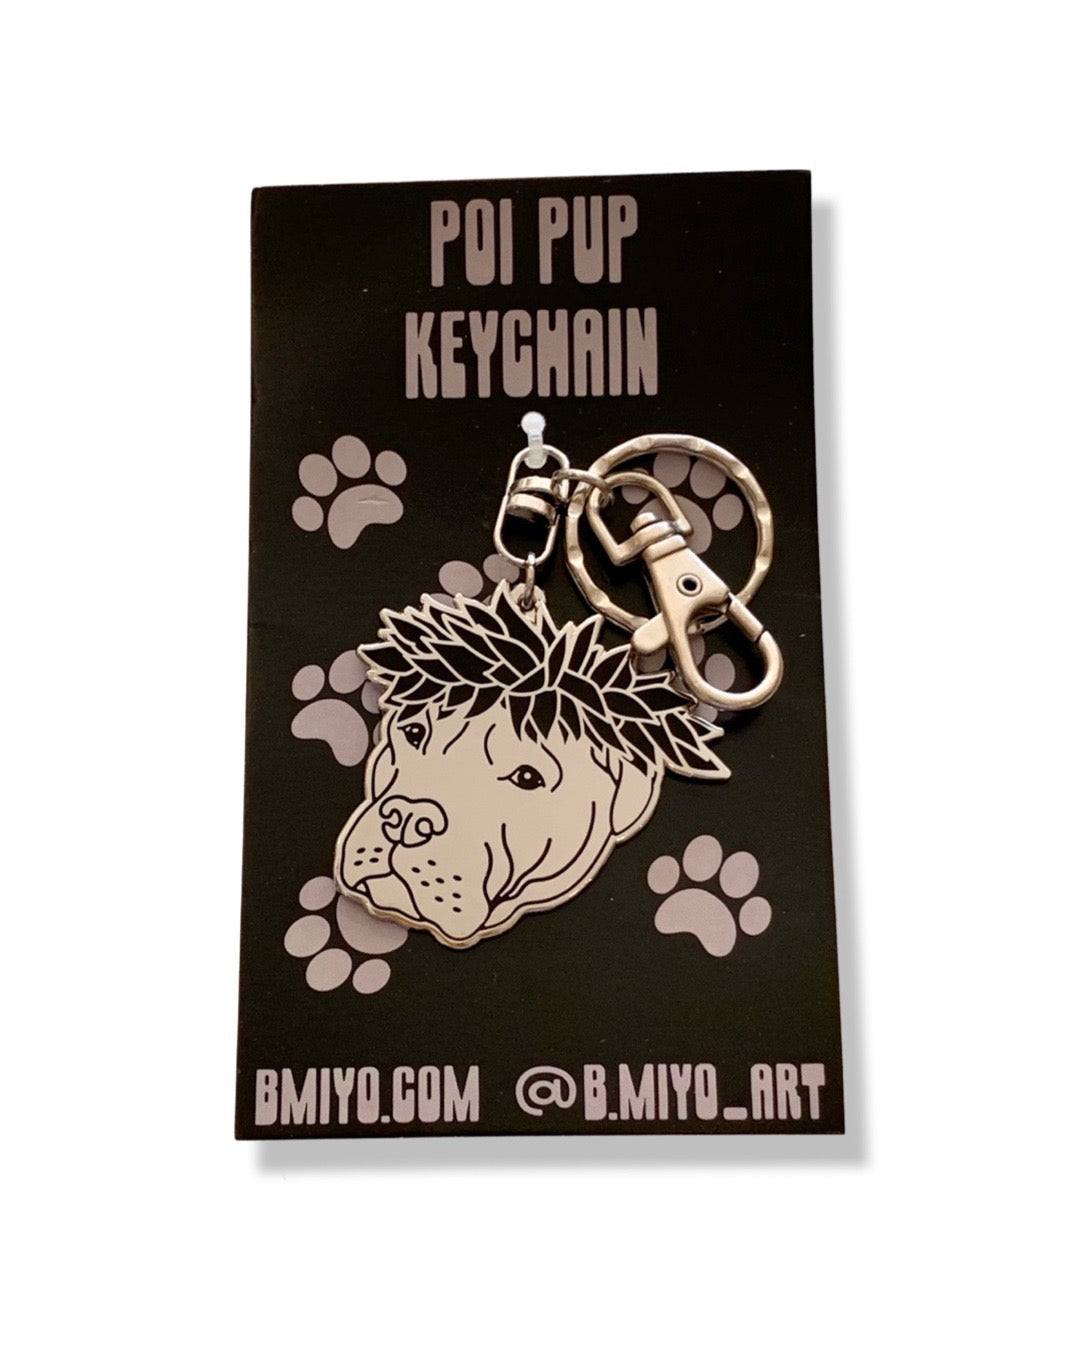 Poi Pup Keychain